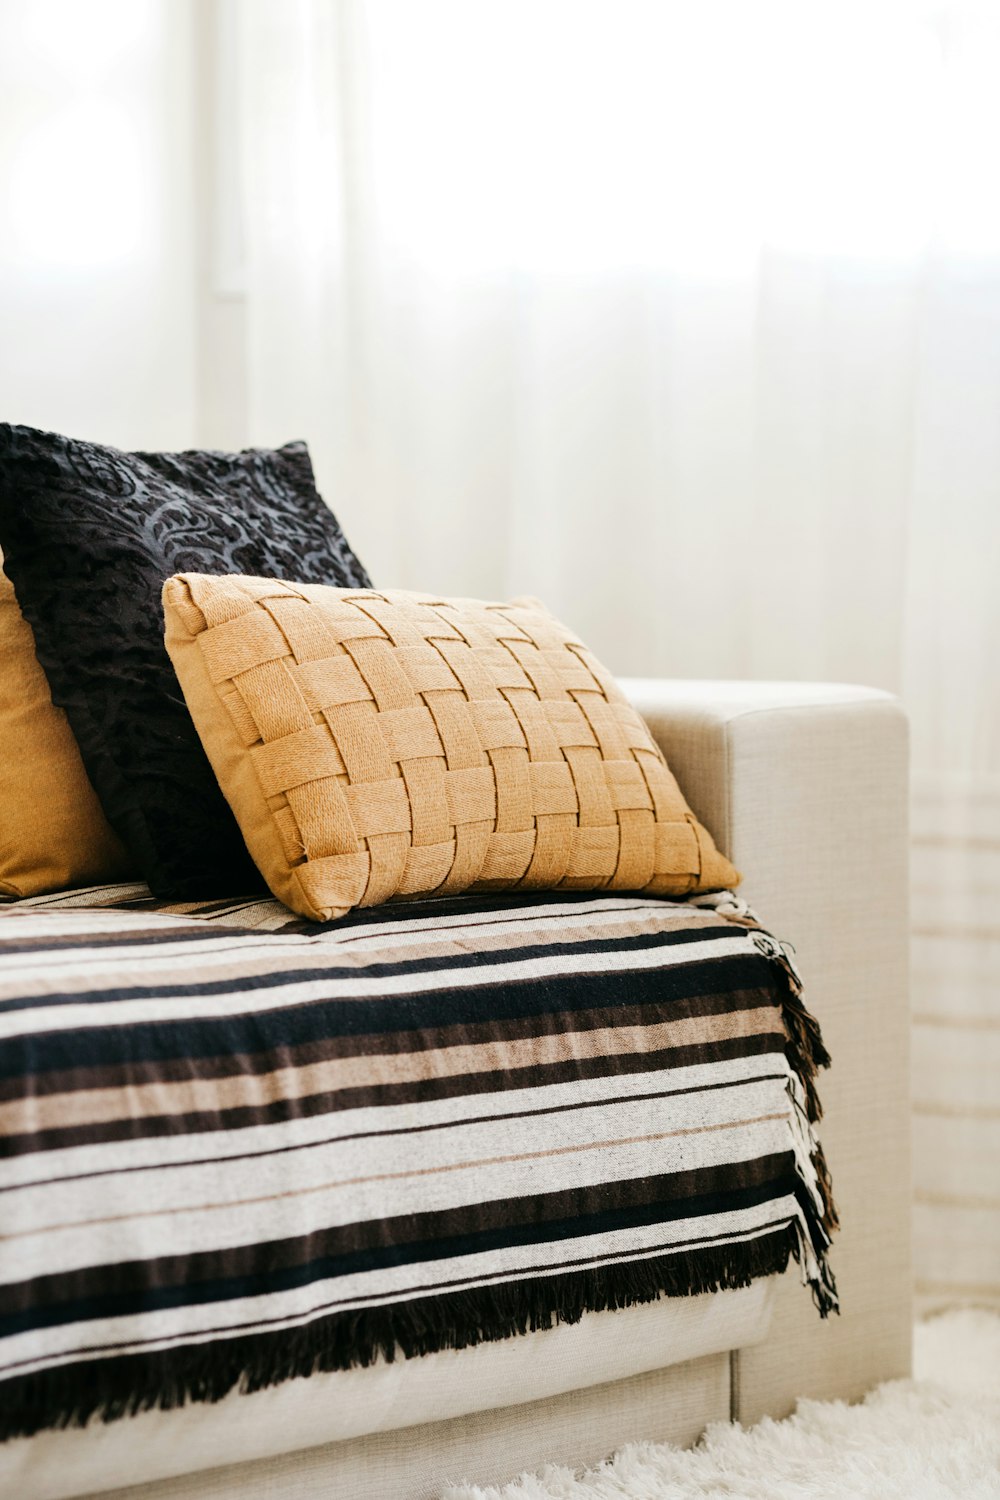 white and black striped throw pillow on white and black striped sofa